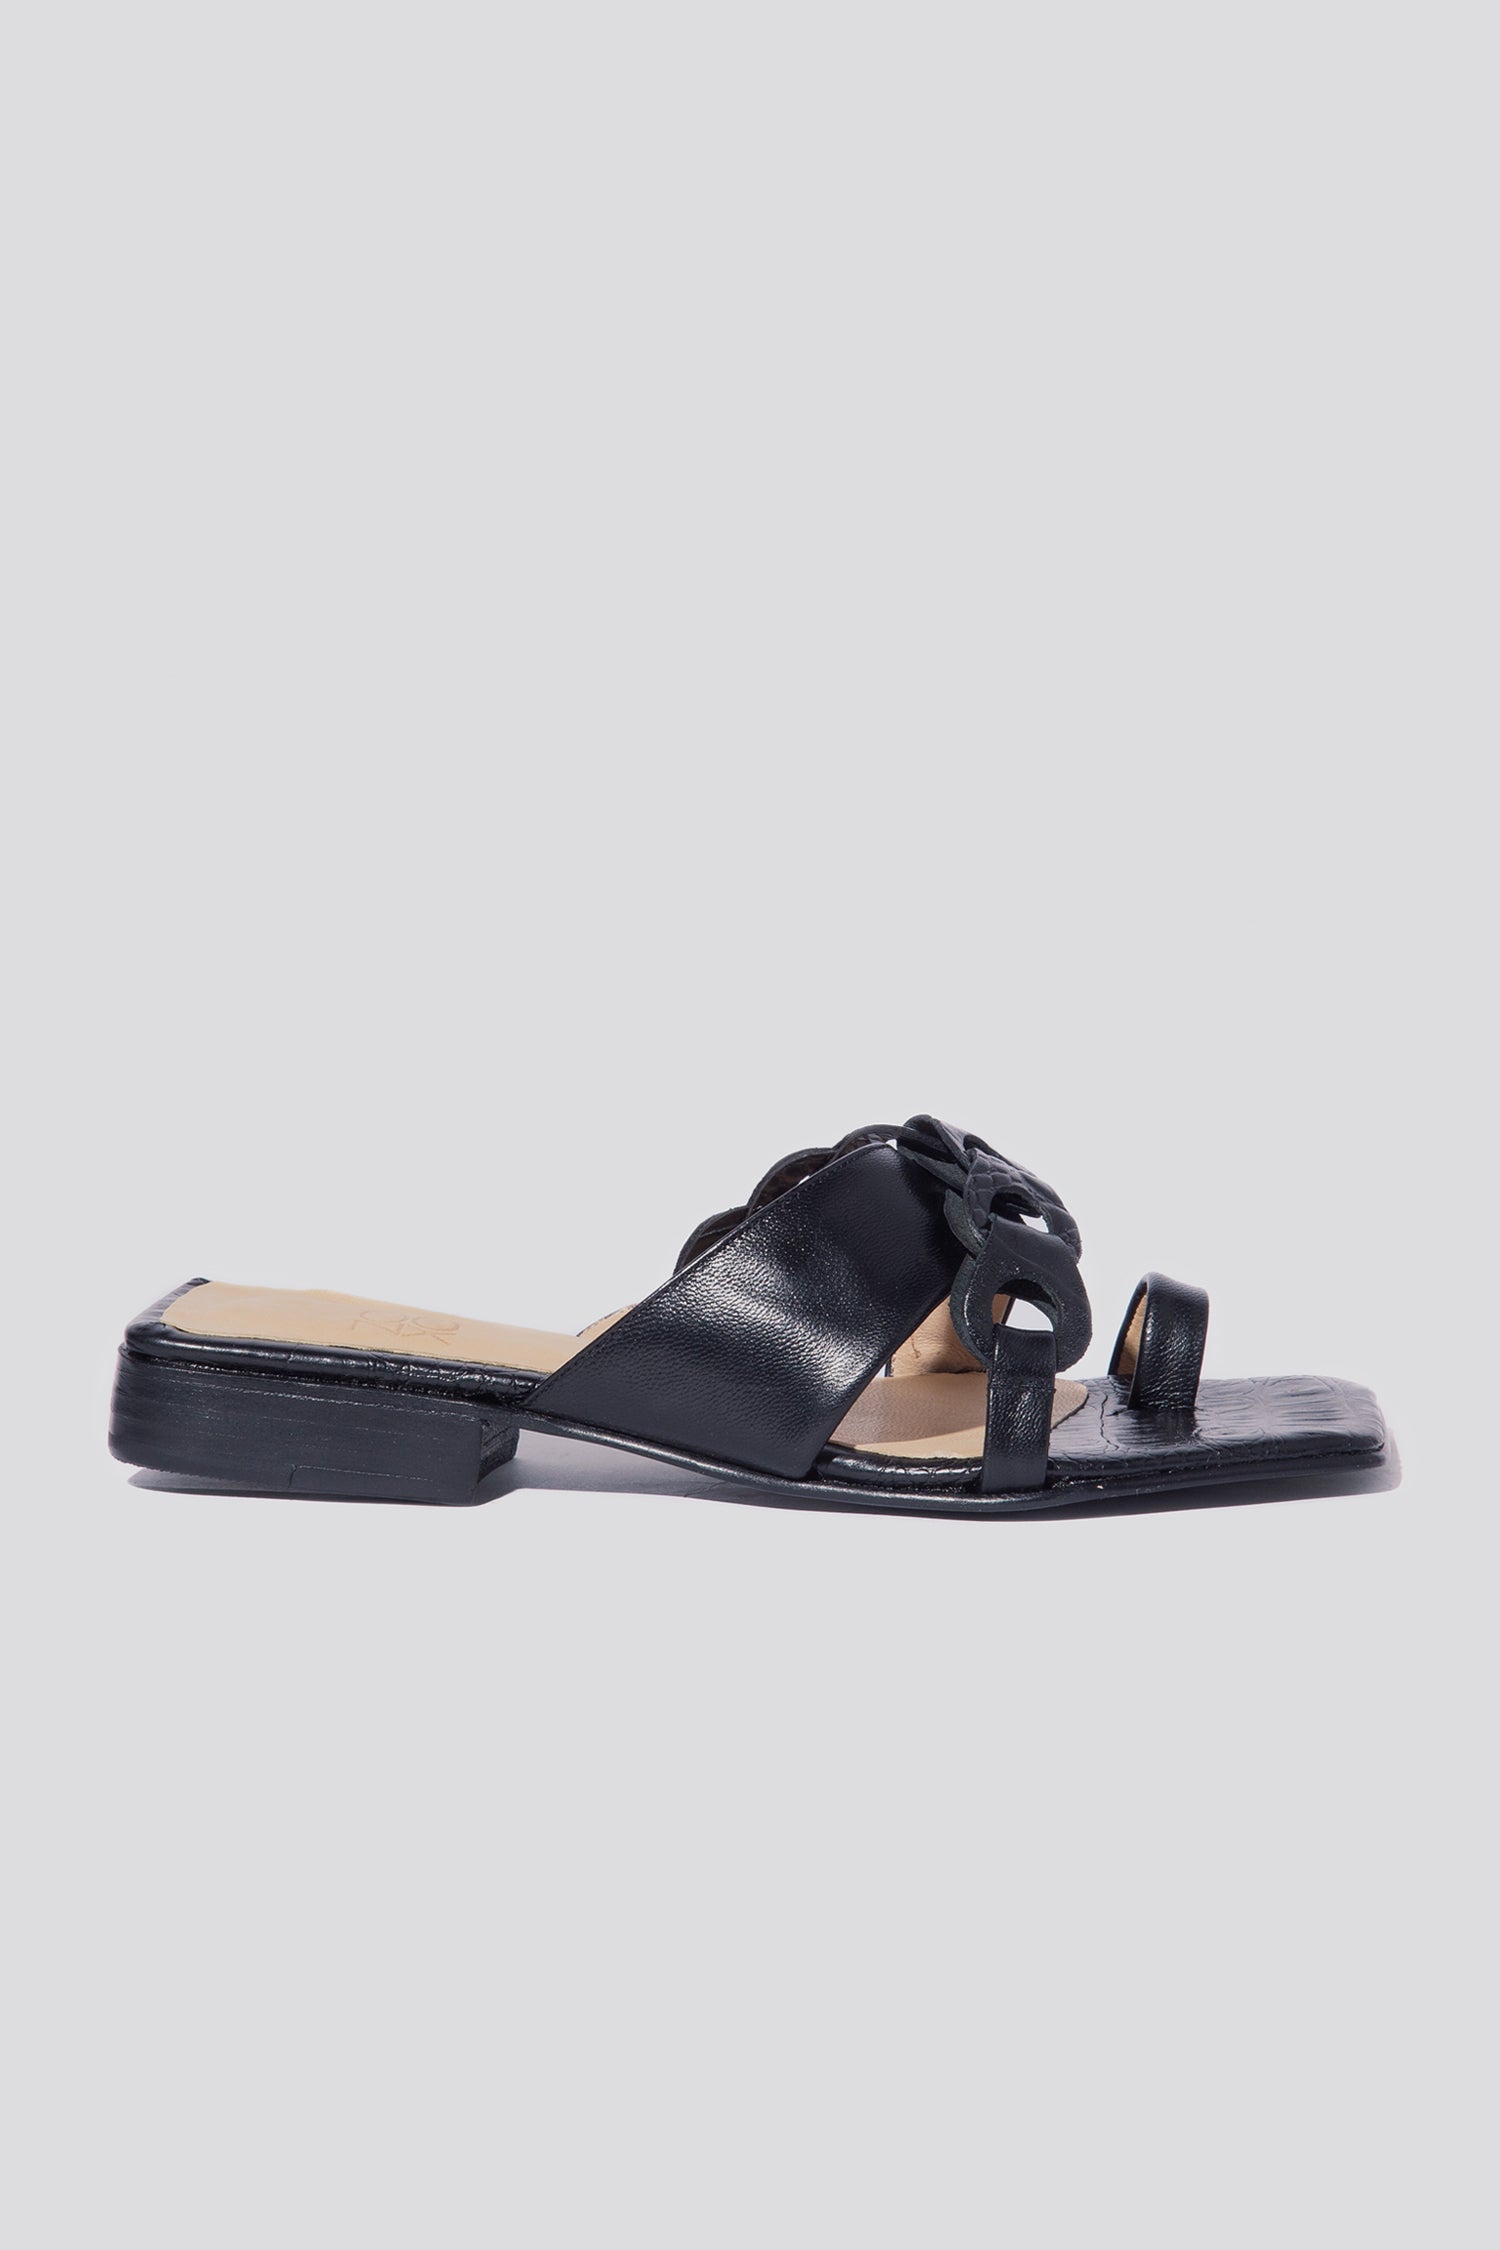 Womens Padded Square Peep Toe Block Heel Sandals Ladies Slip On Mule Shoes  Size | eBay